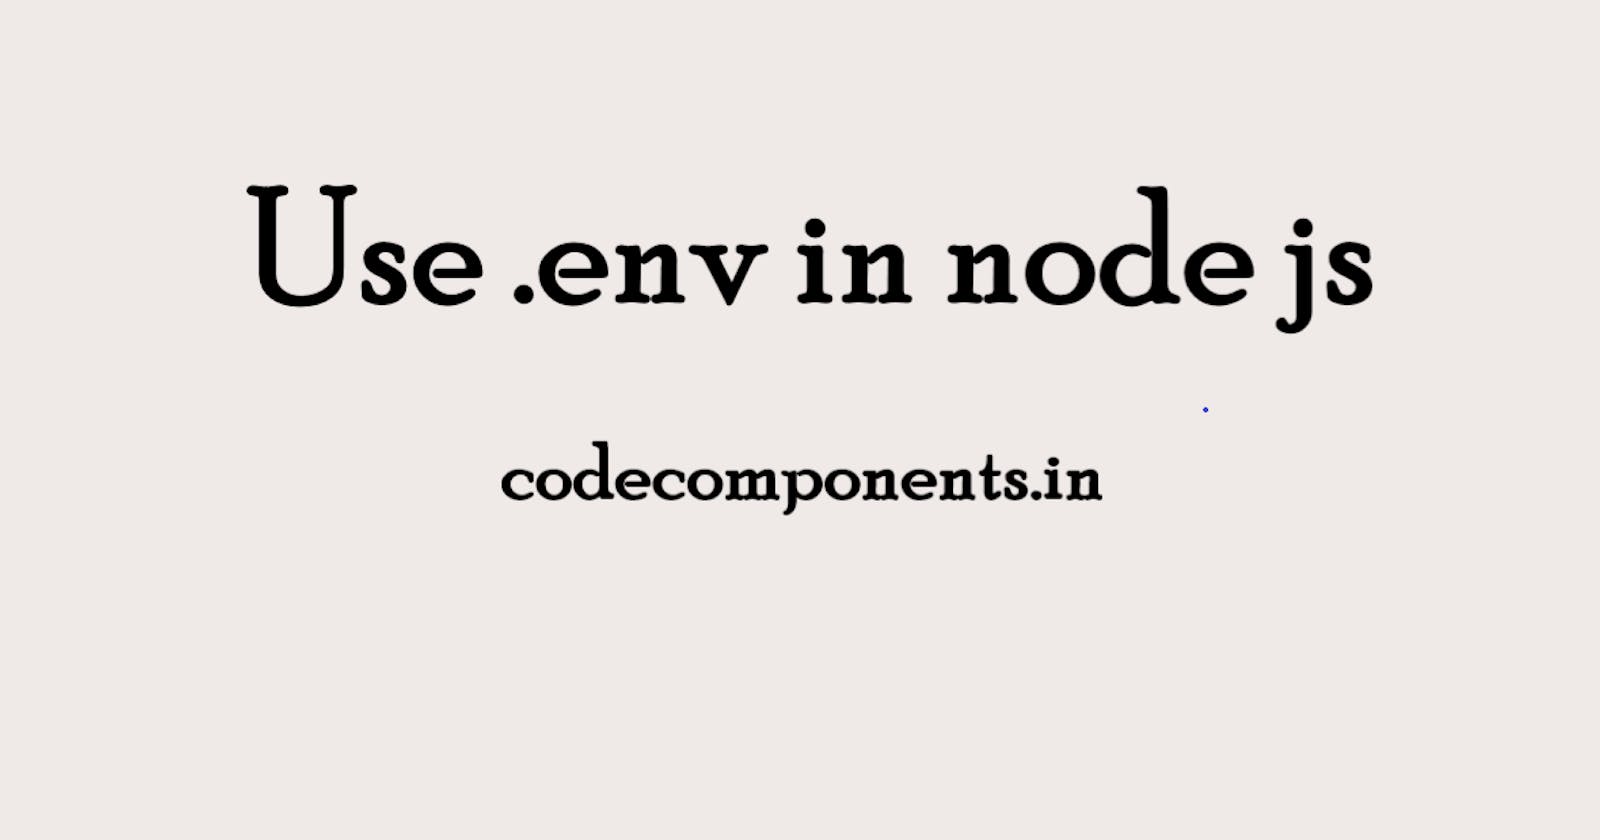 How do I setup the dotenv file in Node.js?